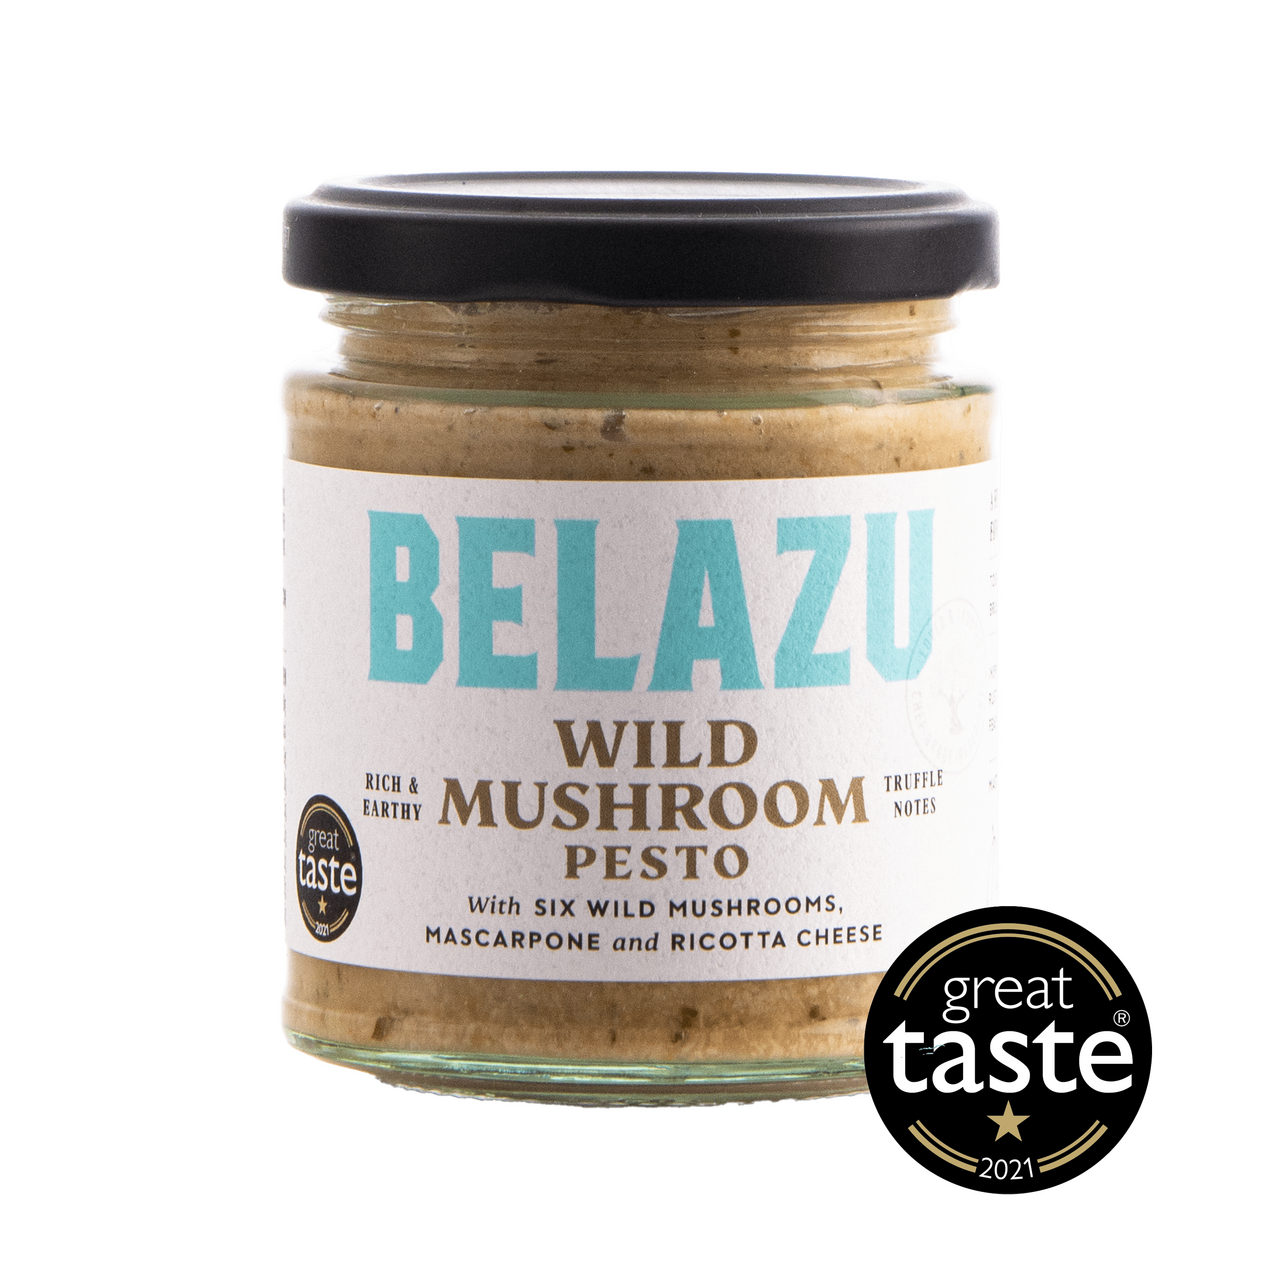 Belazu - Wild Mushroom Pesto